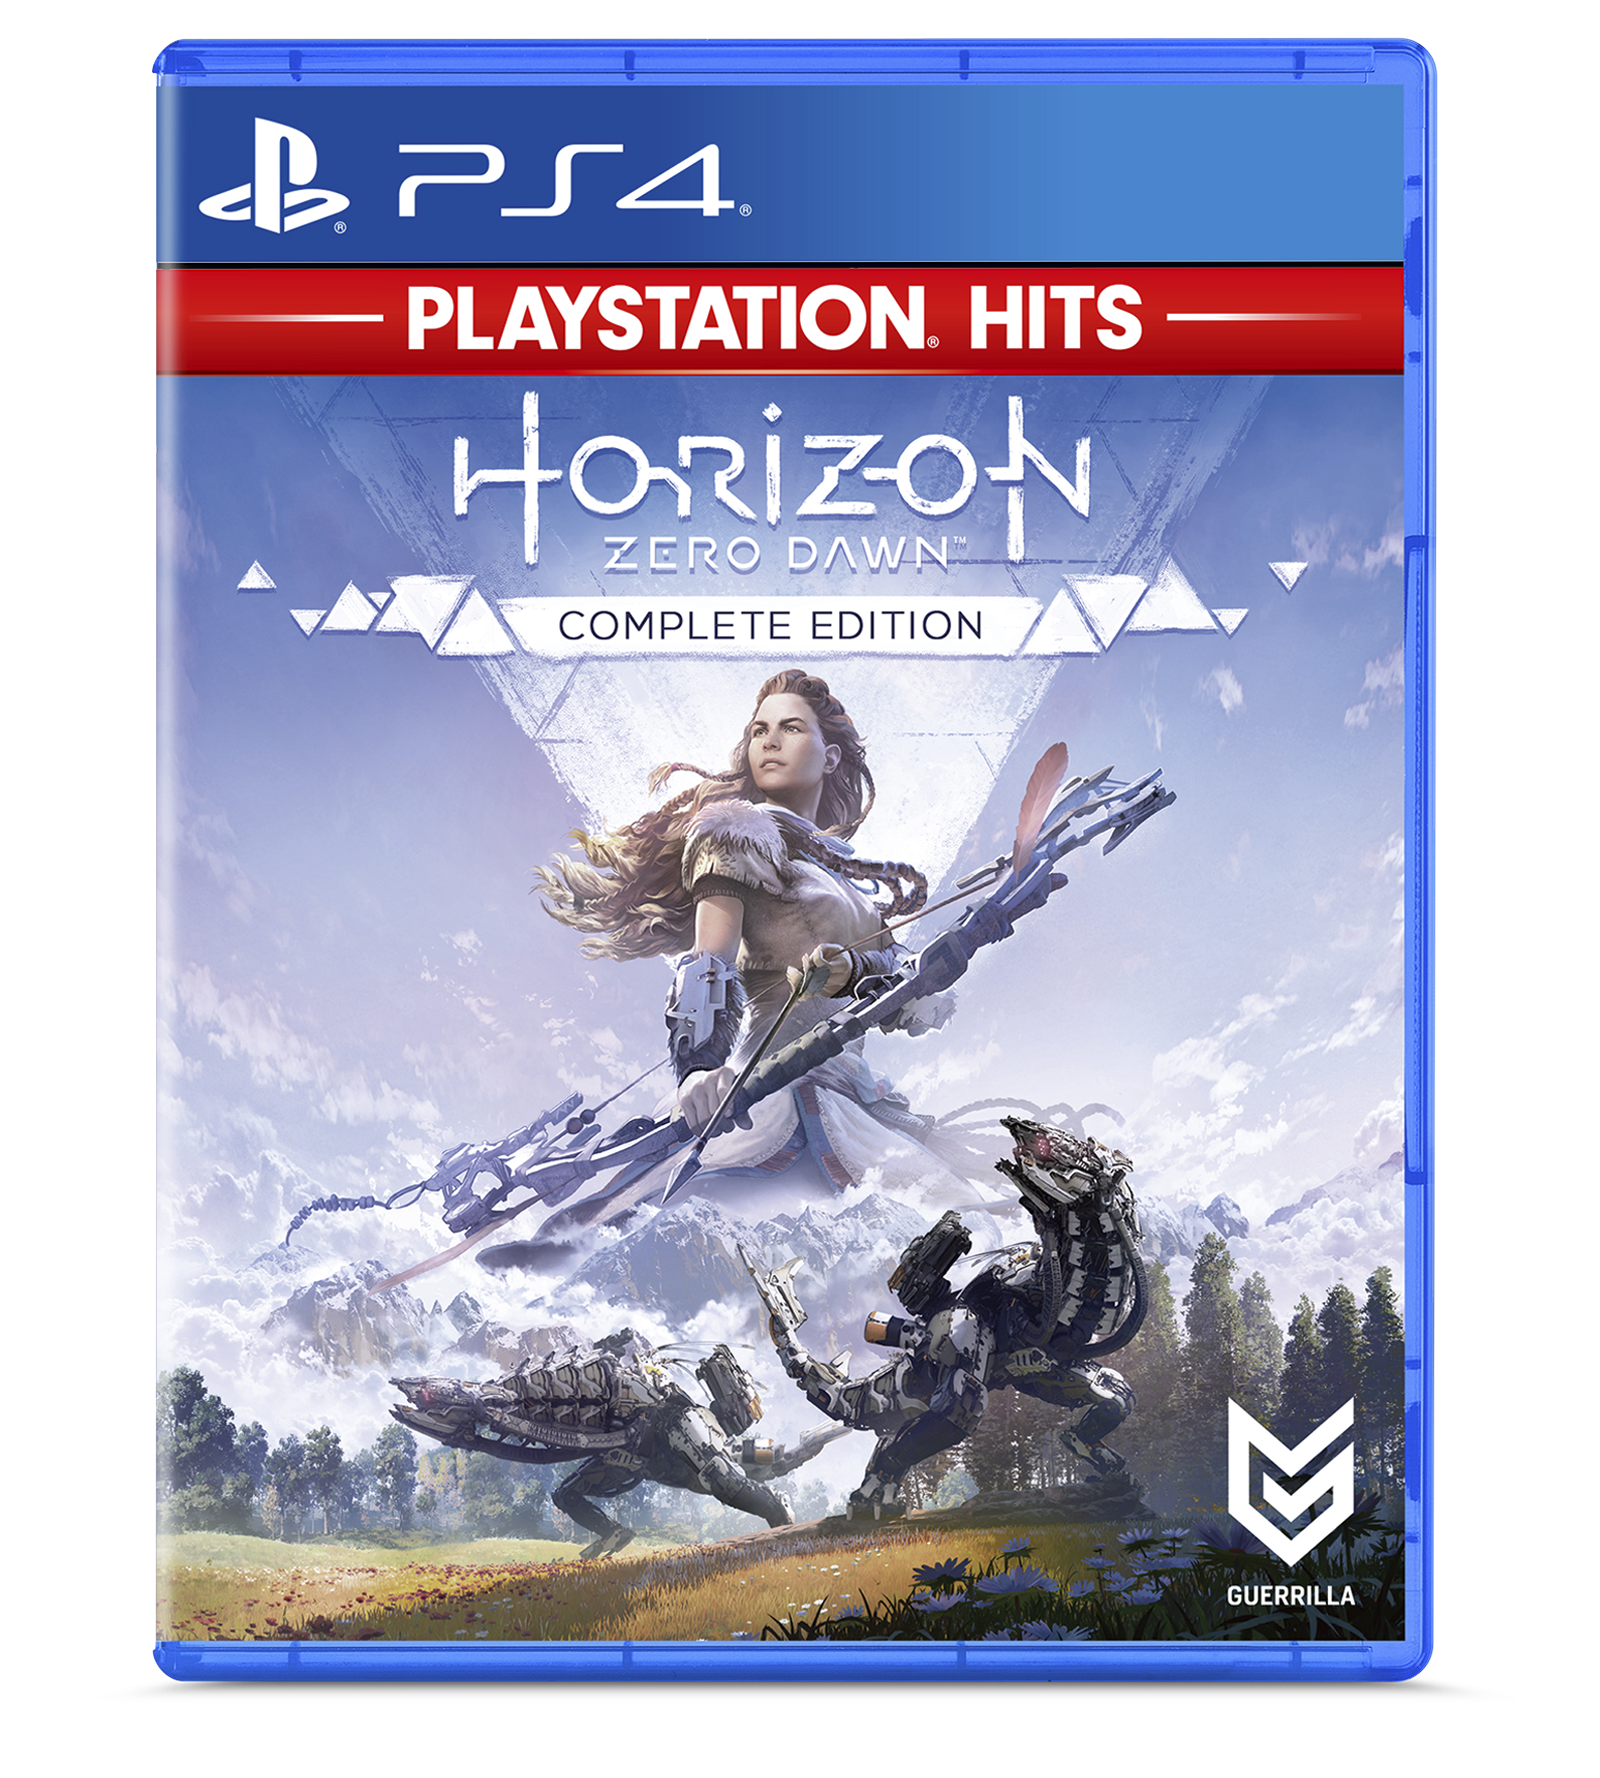 Horizon Zero Dawn Complete Edition Hits